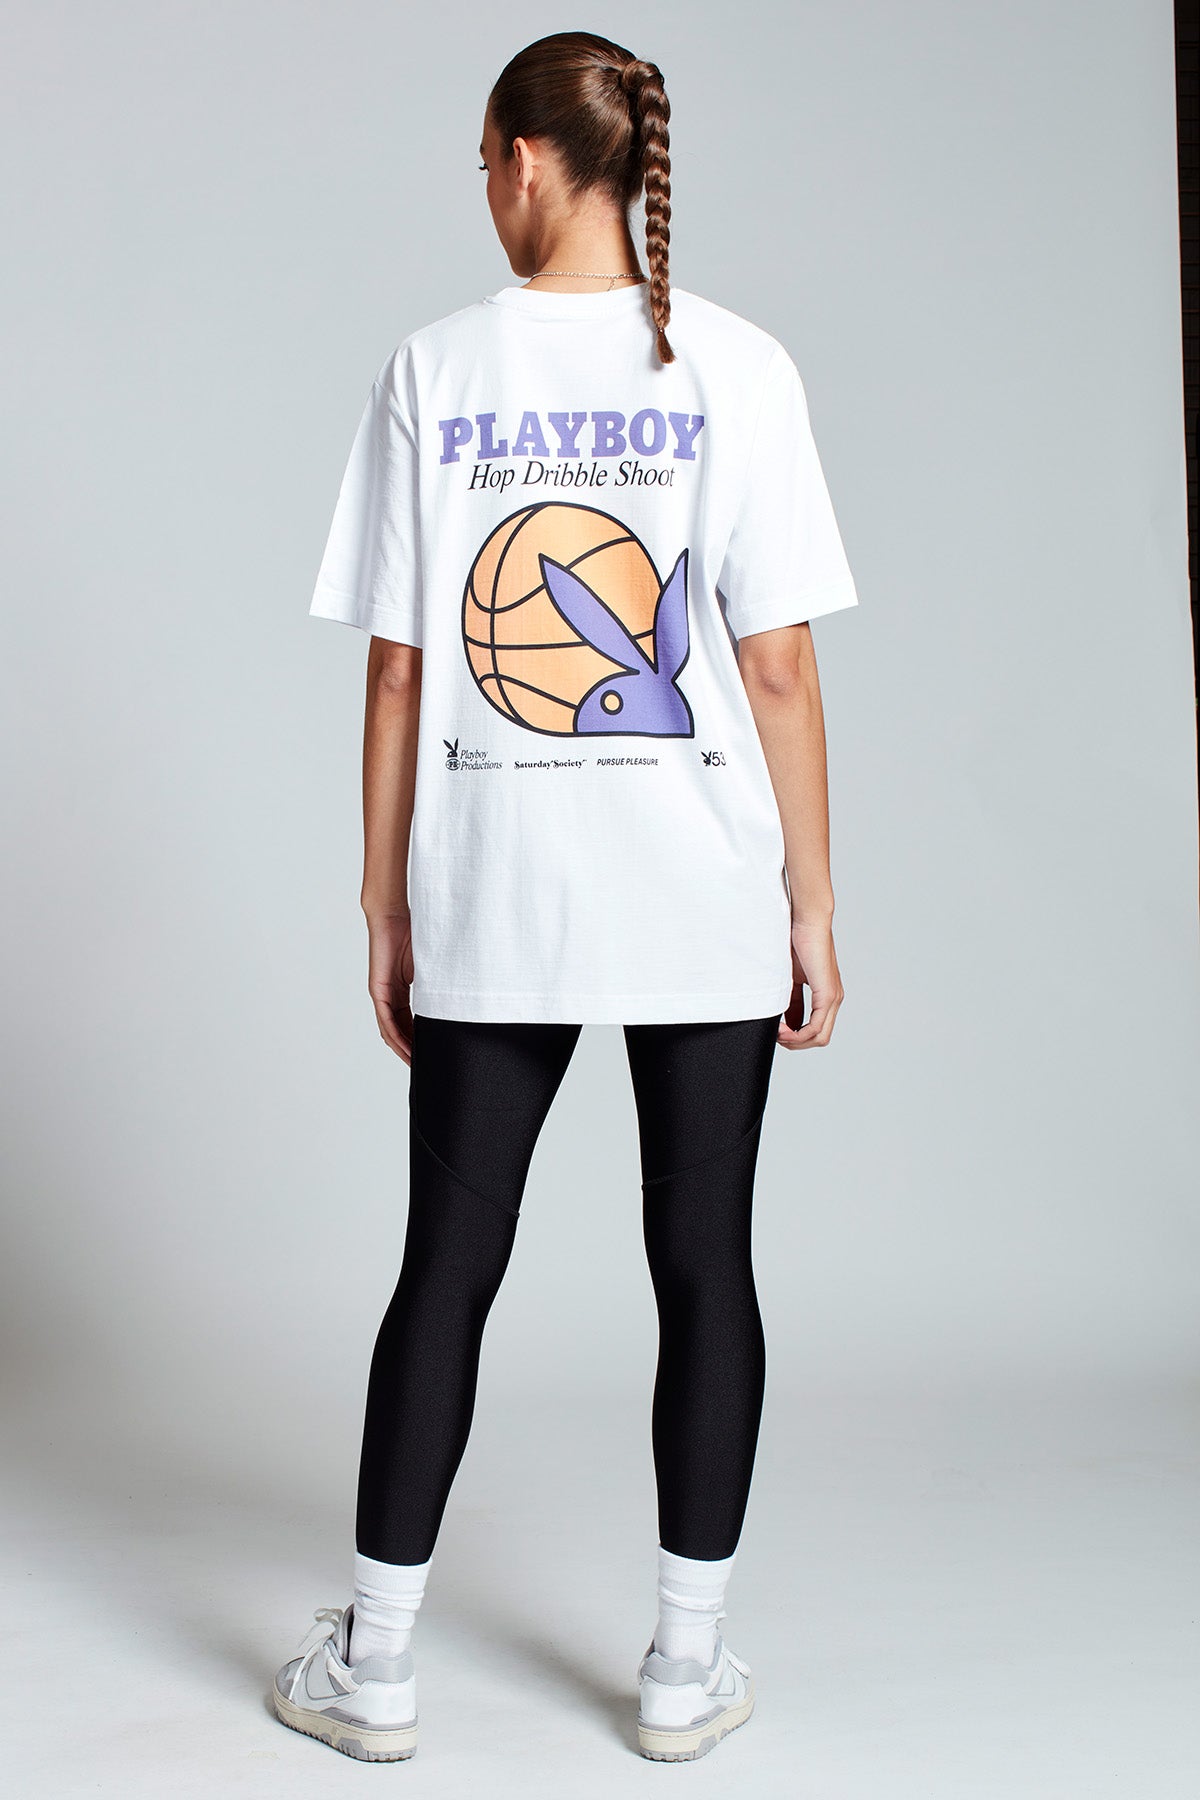 Playboy Hop Dribble Shoot T-shirt in White